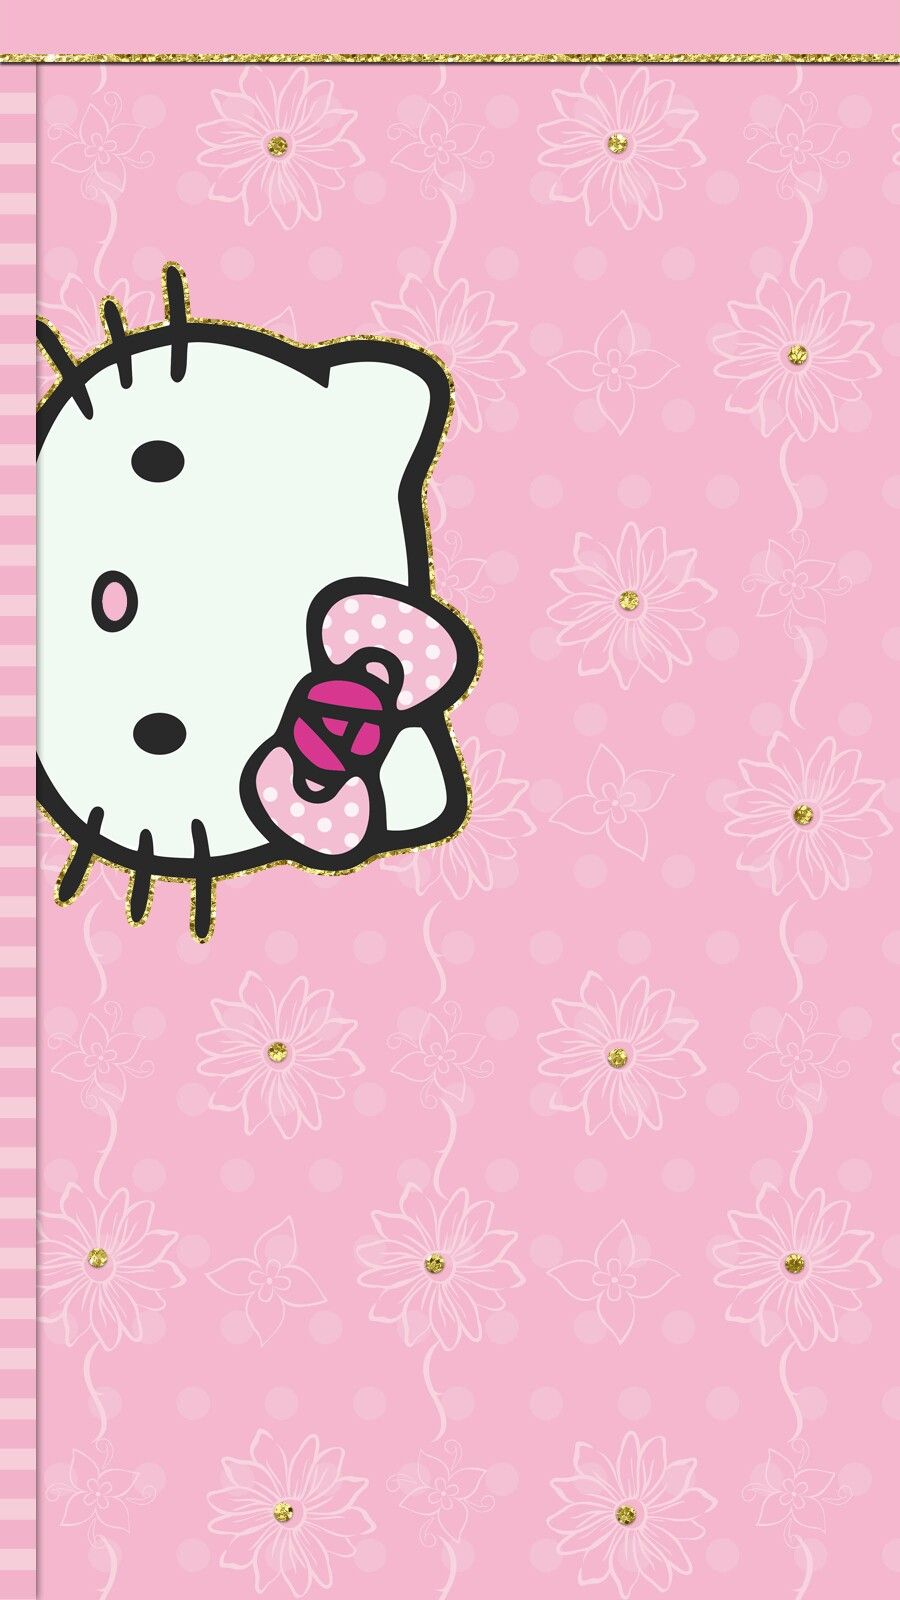 Phone Hello Kitty Wallpaper Hd - HD Wallpaper 